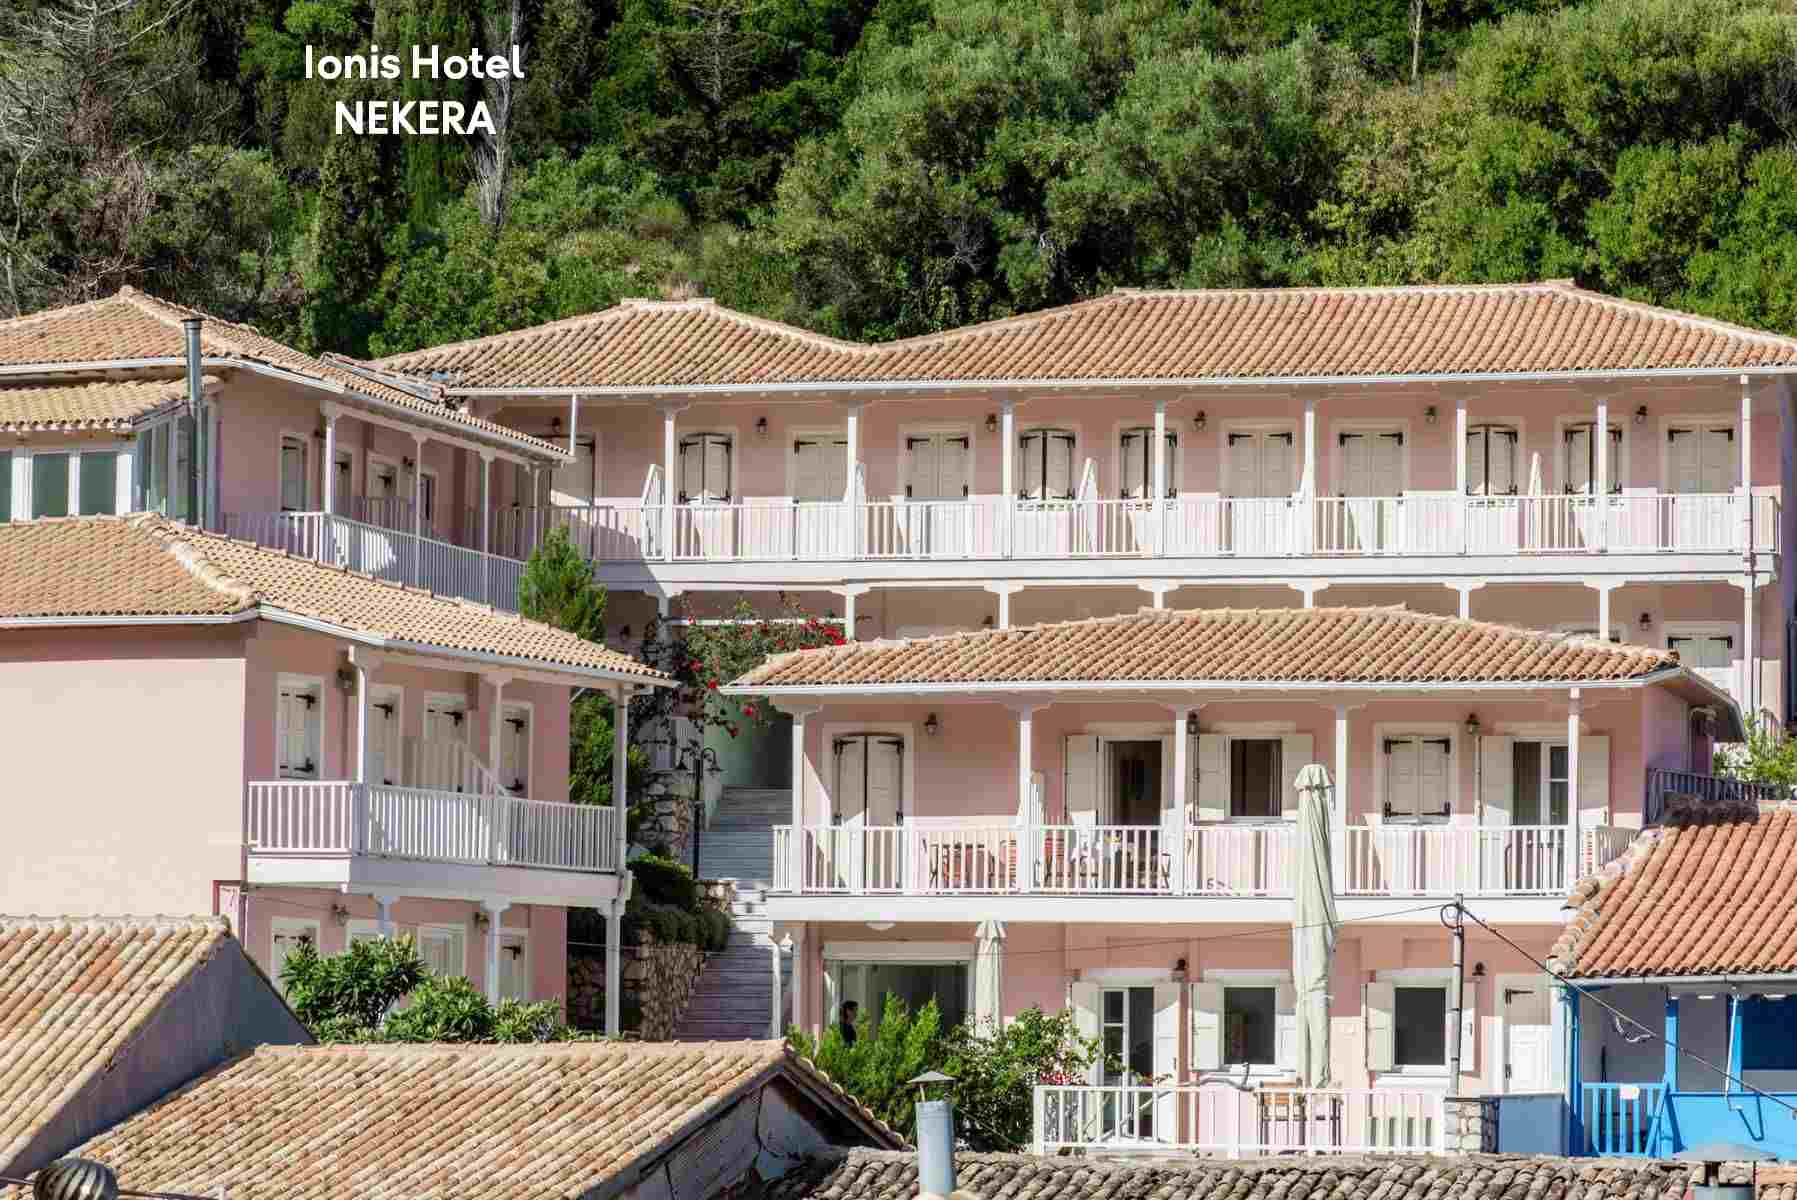 Ionis Hotel